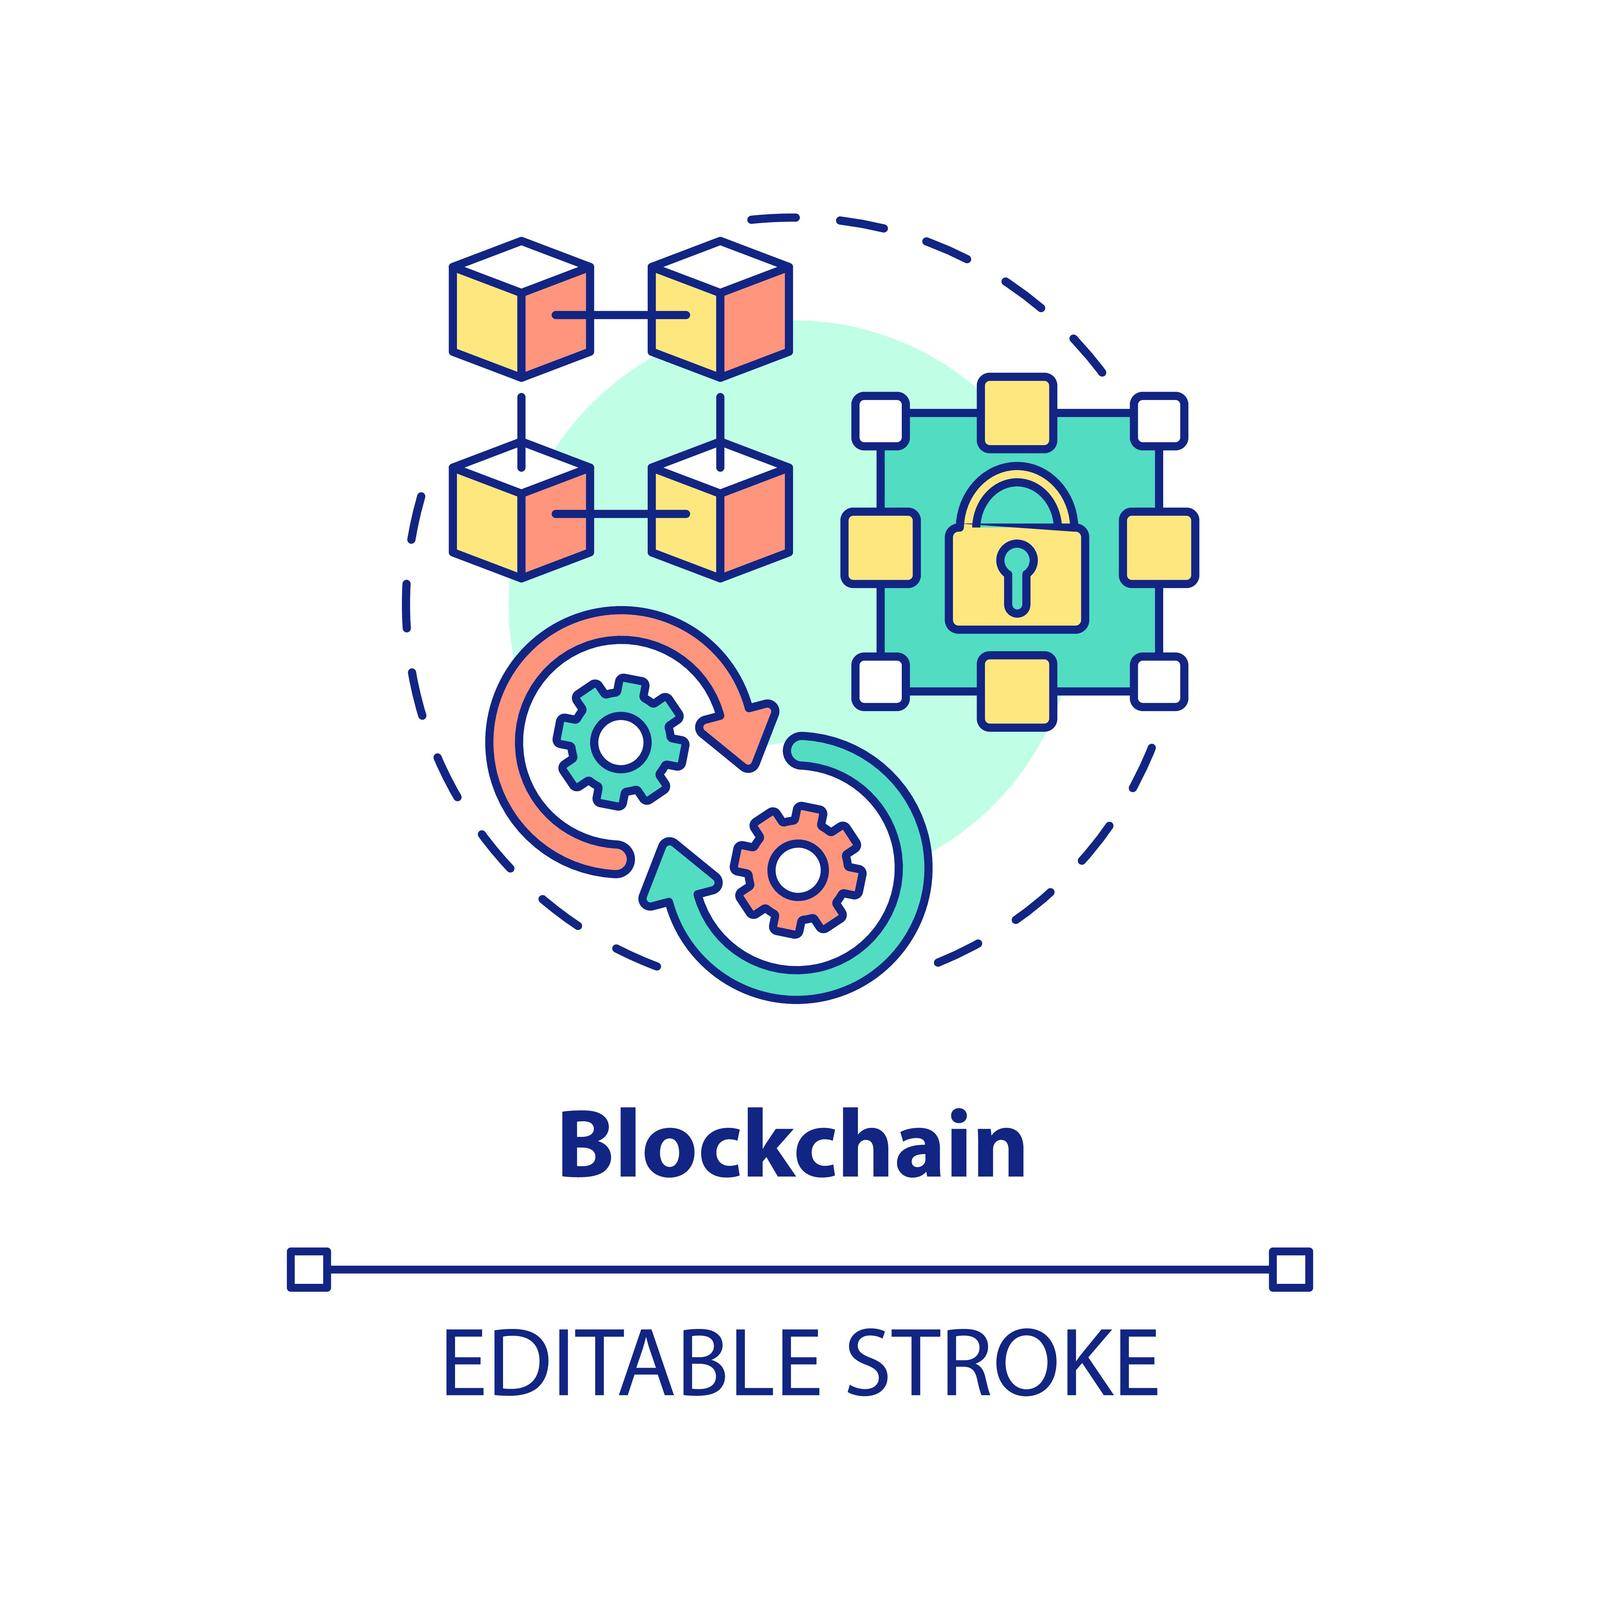 Blockchain concept icon by bsd studio